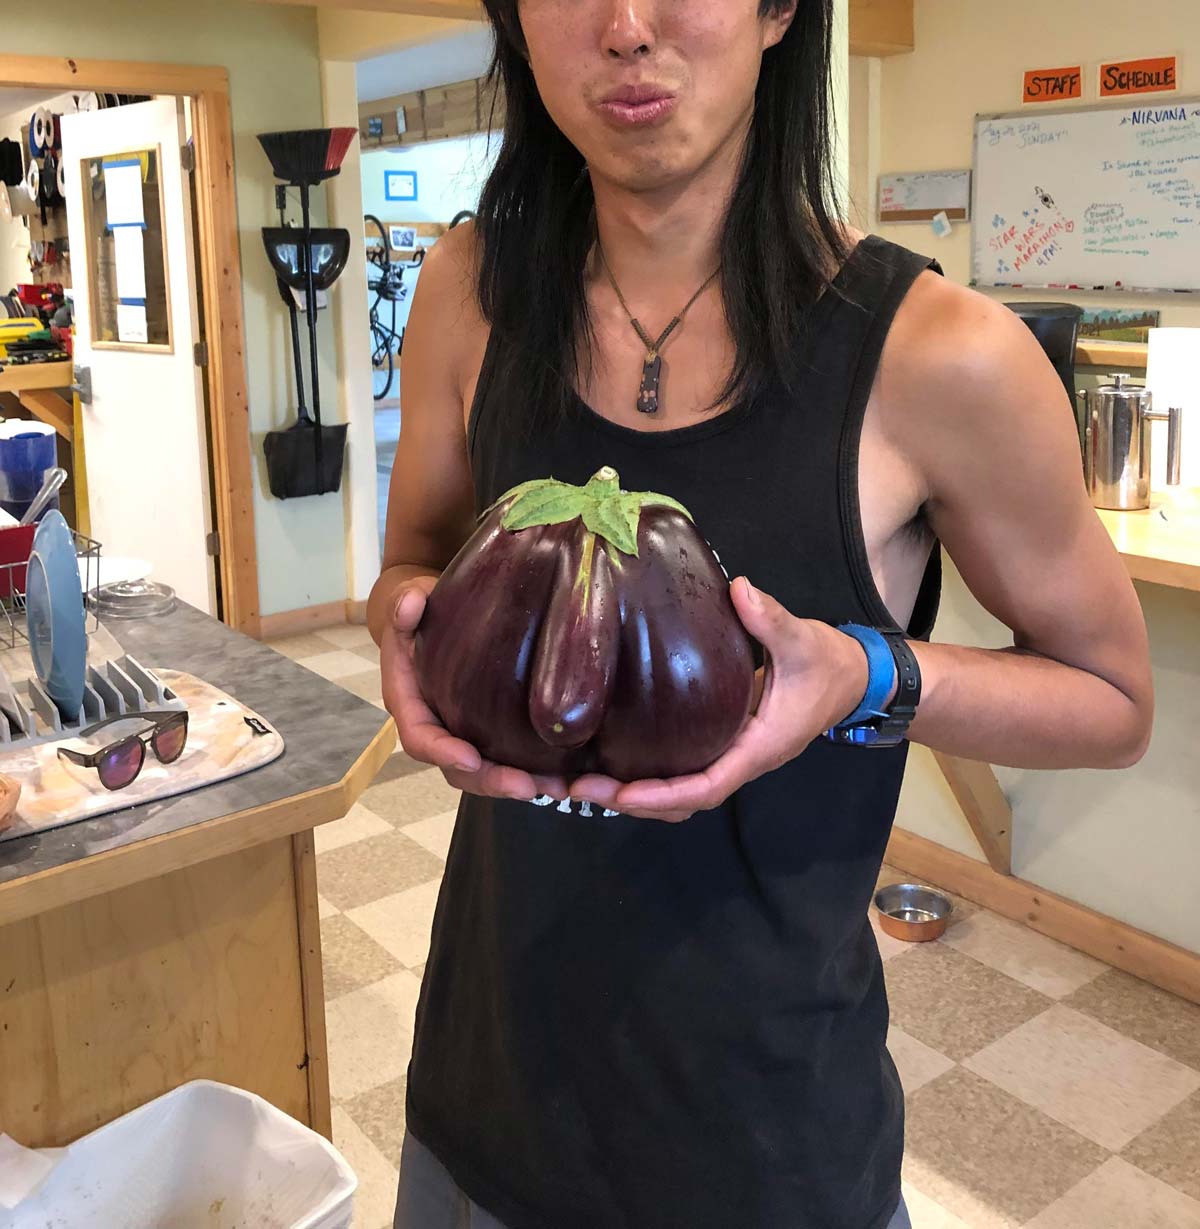 If the eggplant emoji was anatomically correct..